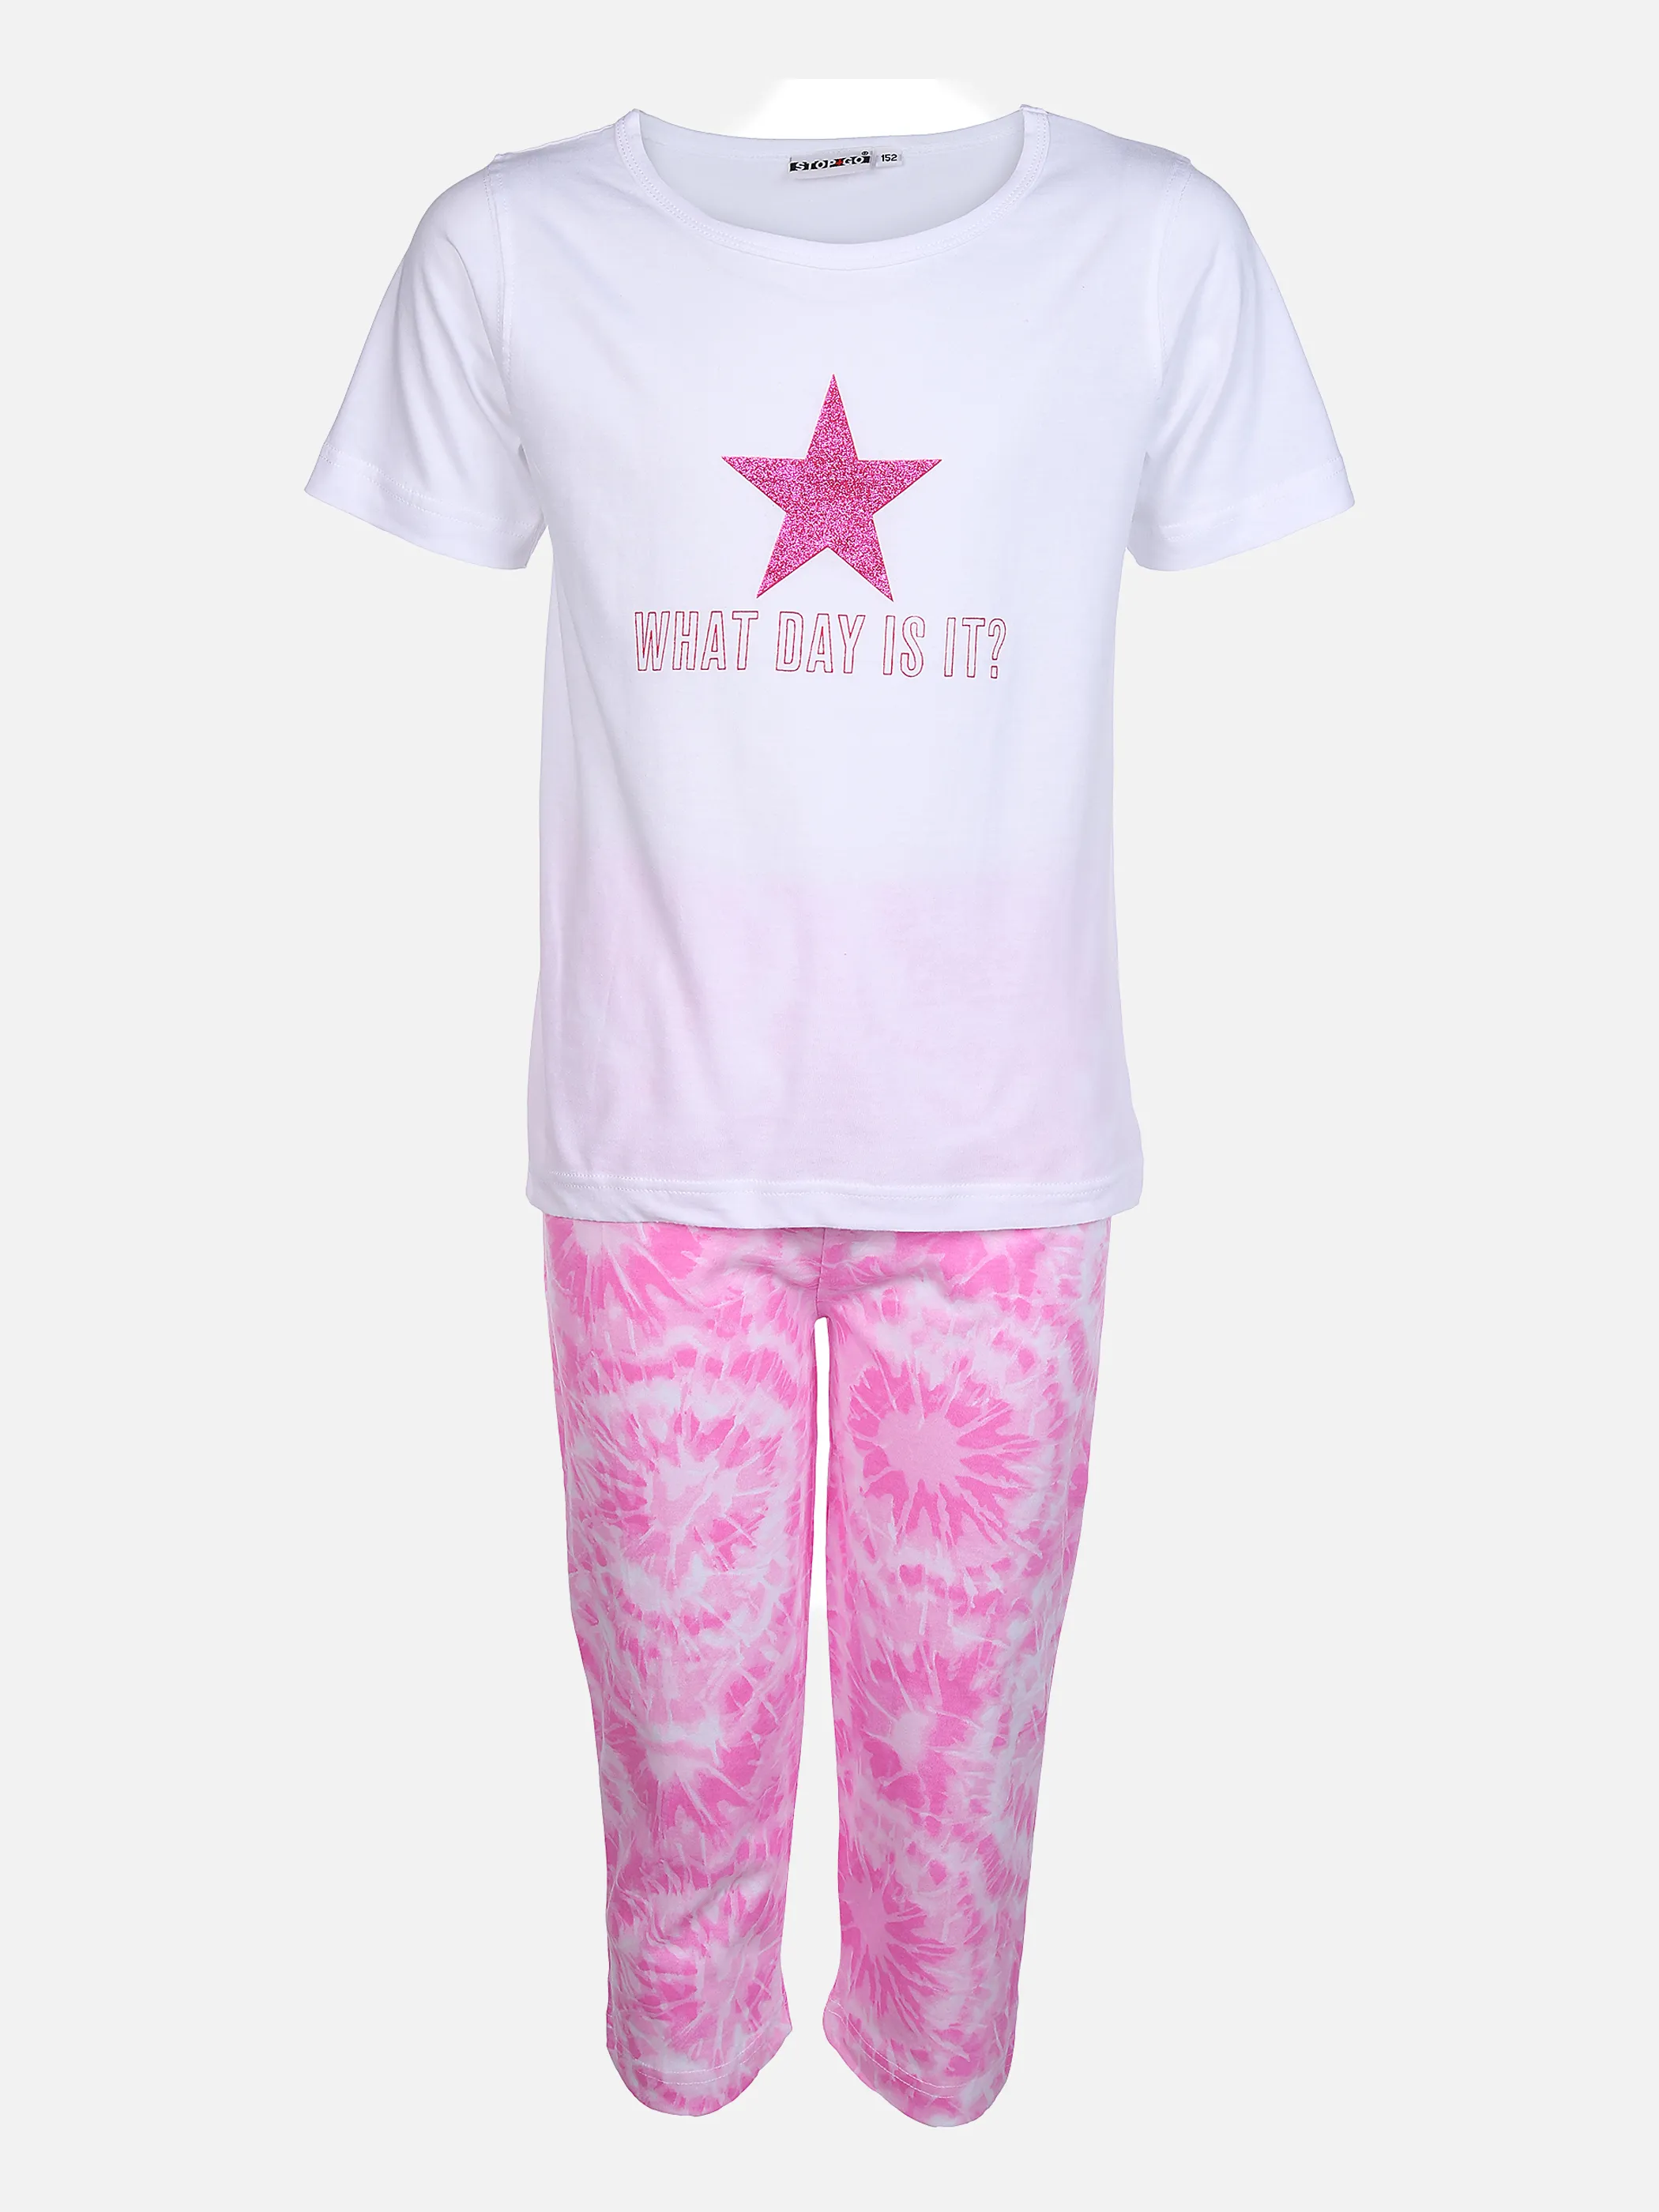 Stop + Go TG Pyjama Set Shirt +3/4 Pant Blau 862754 ROSE/BLUE 1